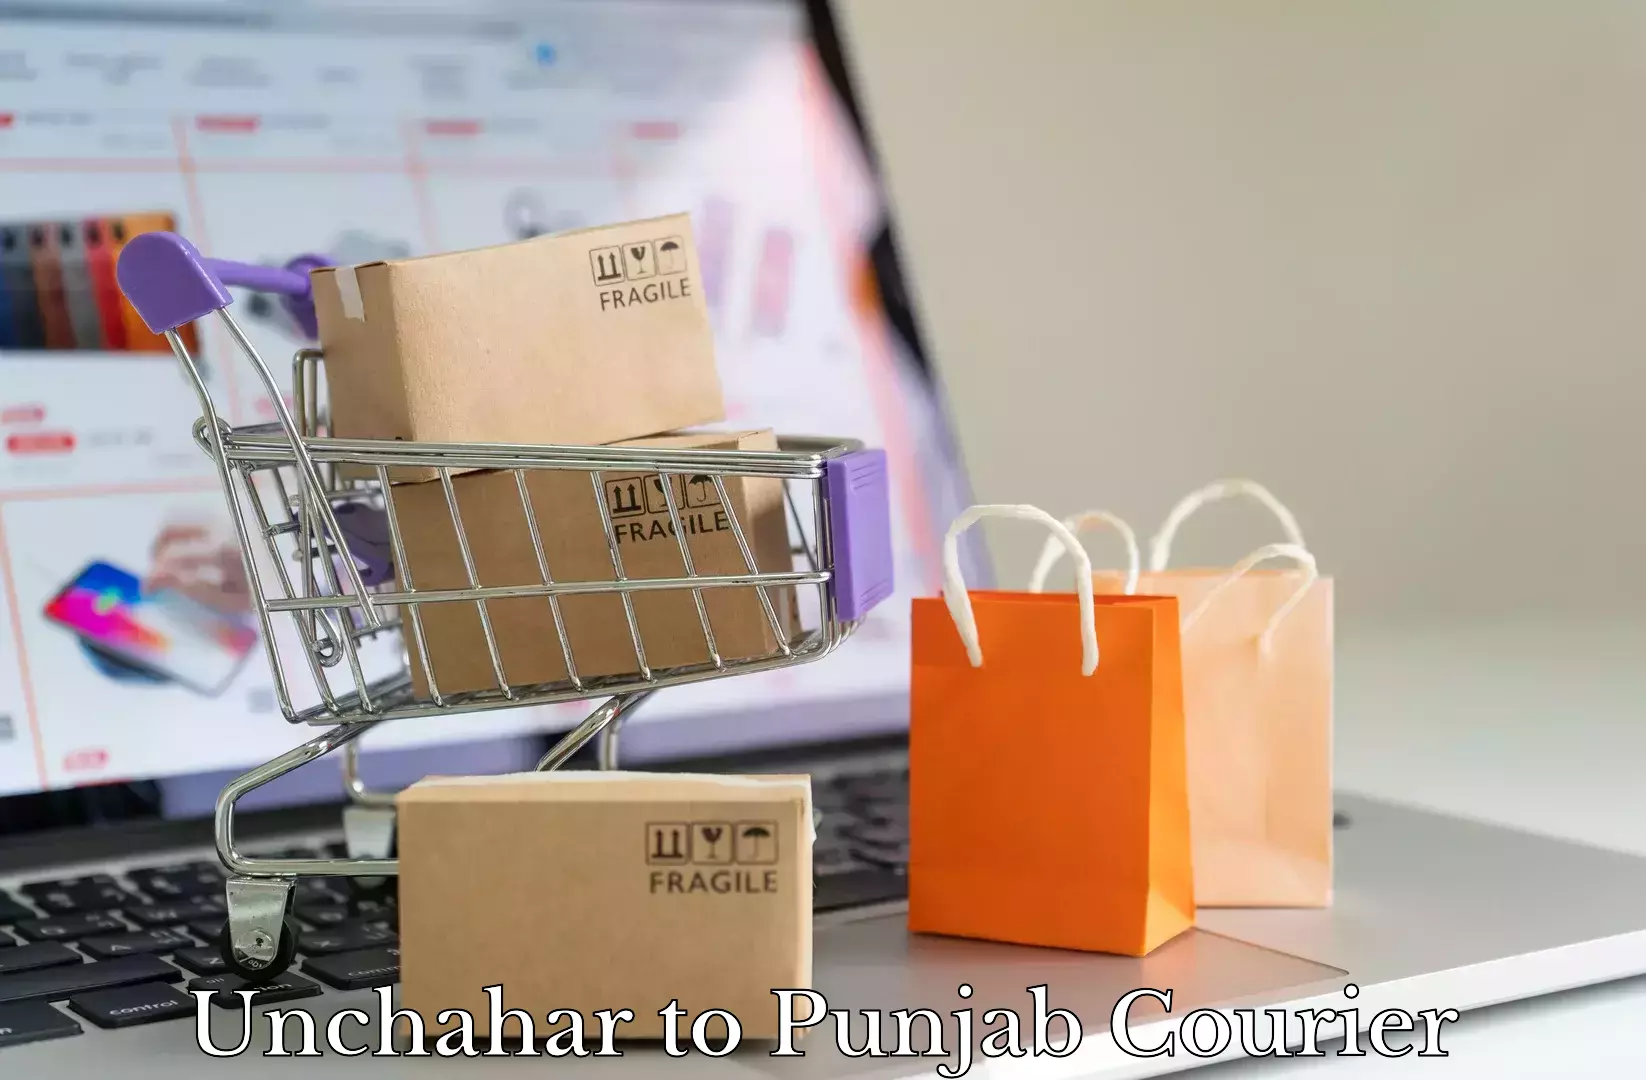 Furniture logistics Unchahar to Punjab